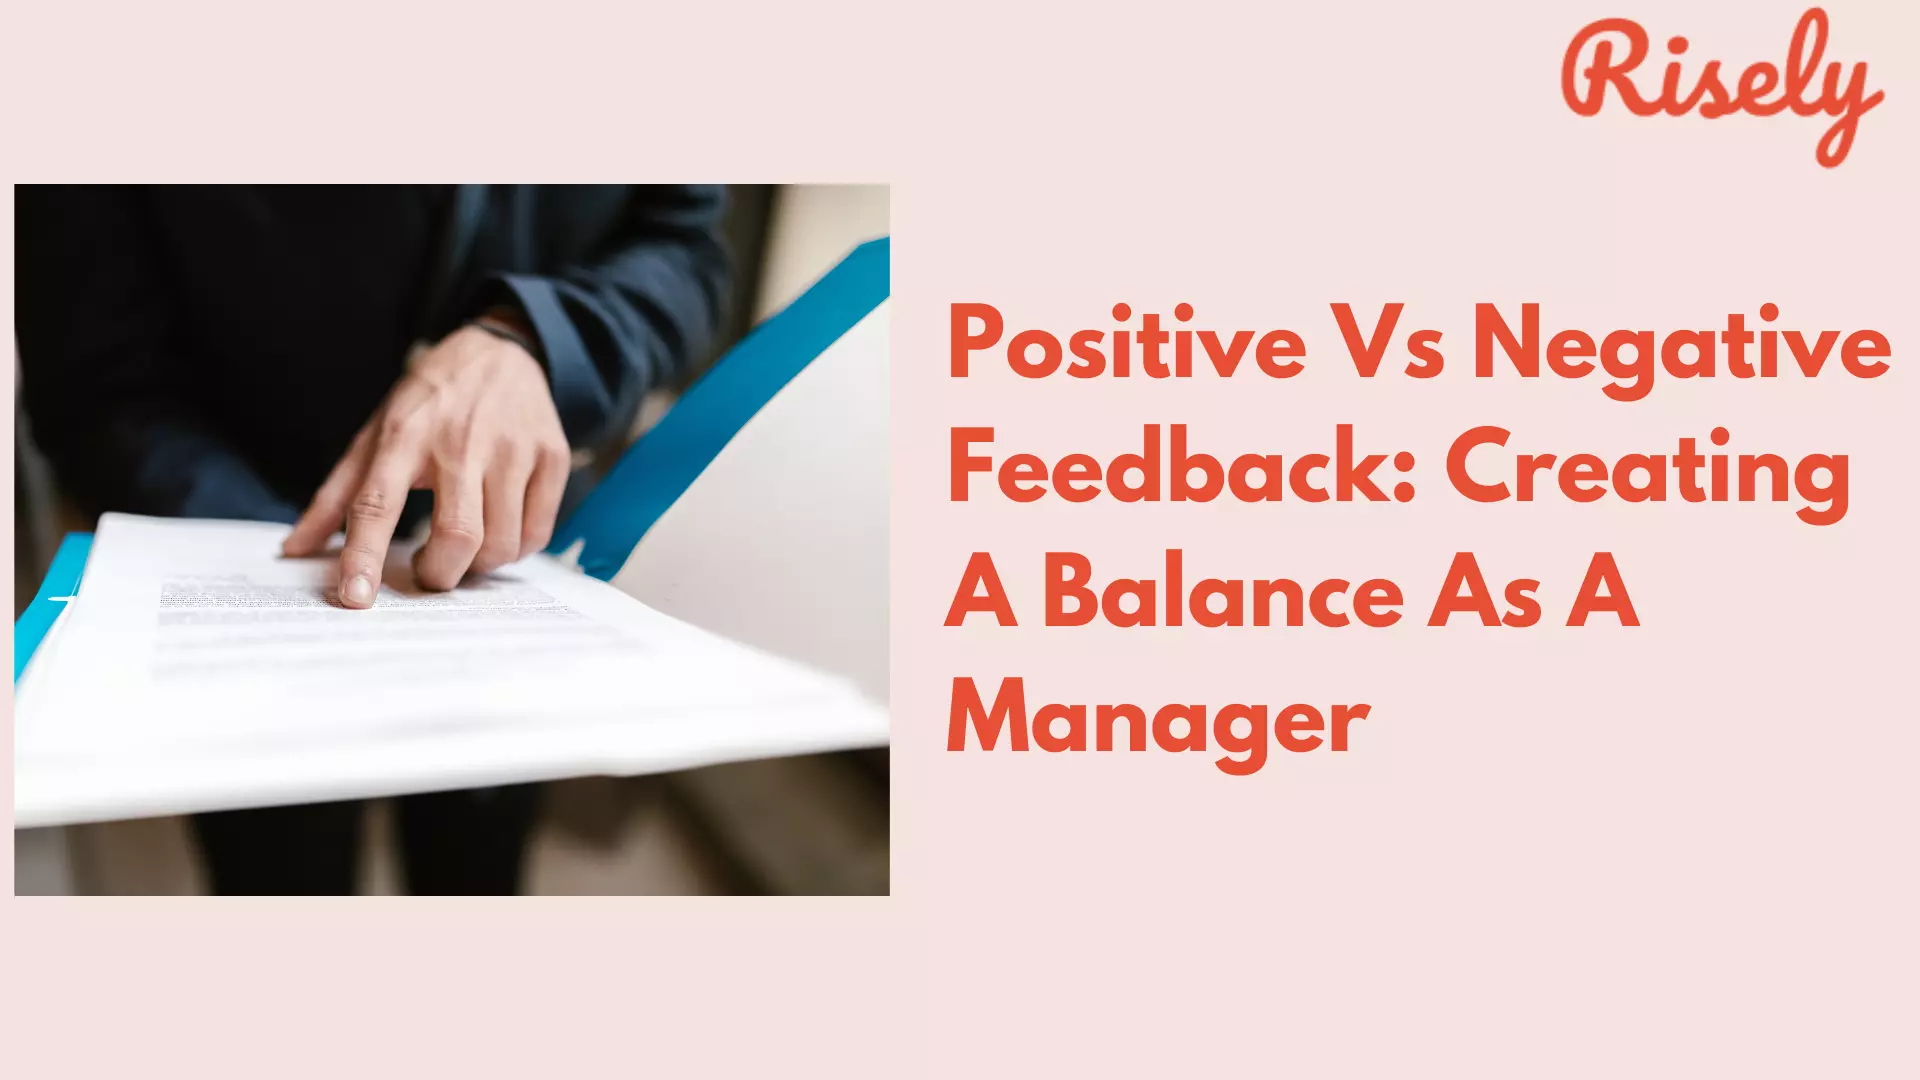 Positive Vs Negative Feedback: Creating A Balance As A Manager